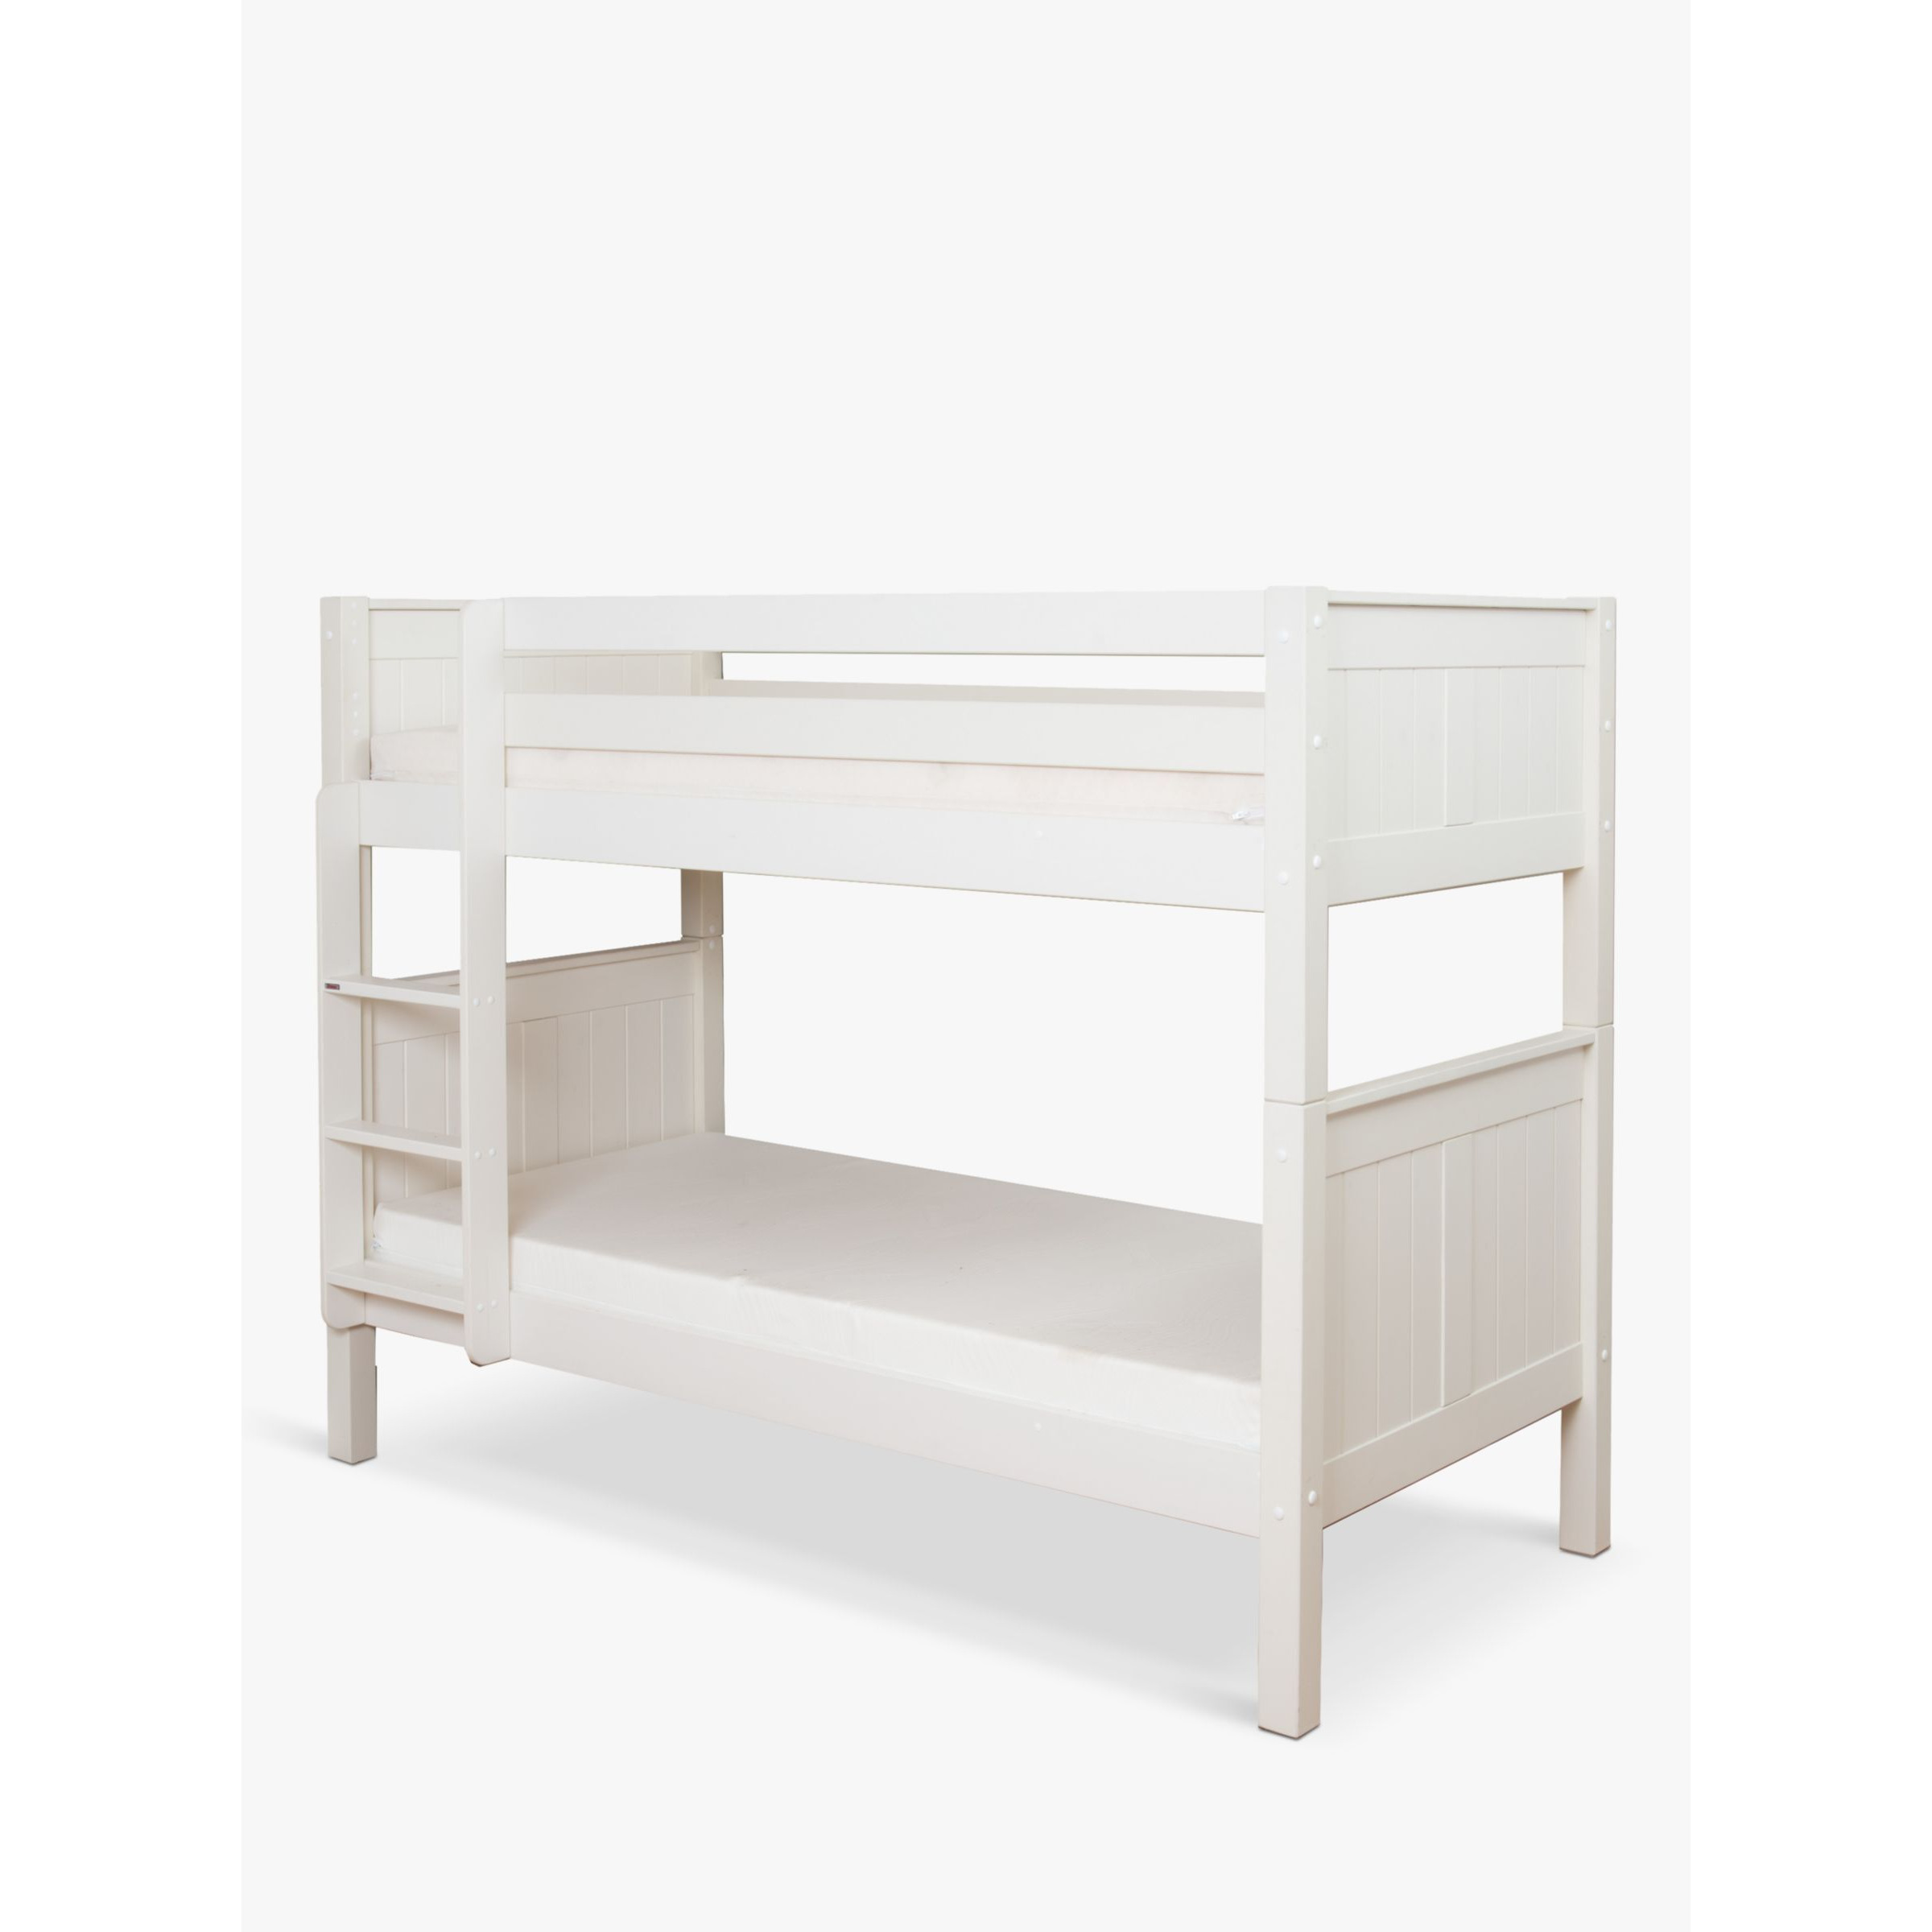 Stompa Classic Kids Originals Bunk Bed, FSC-Certified (Pine), White - image 1